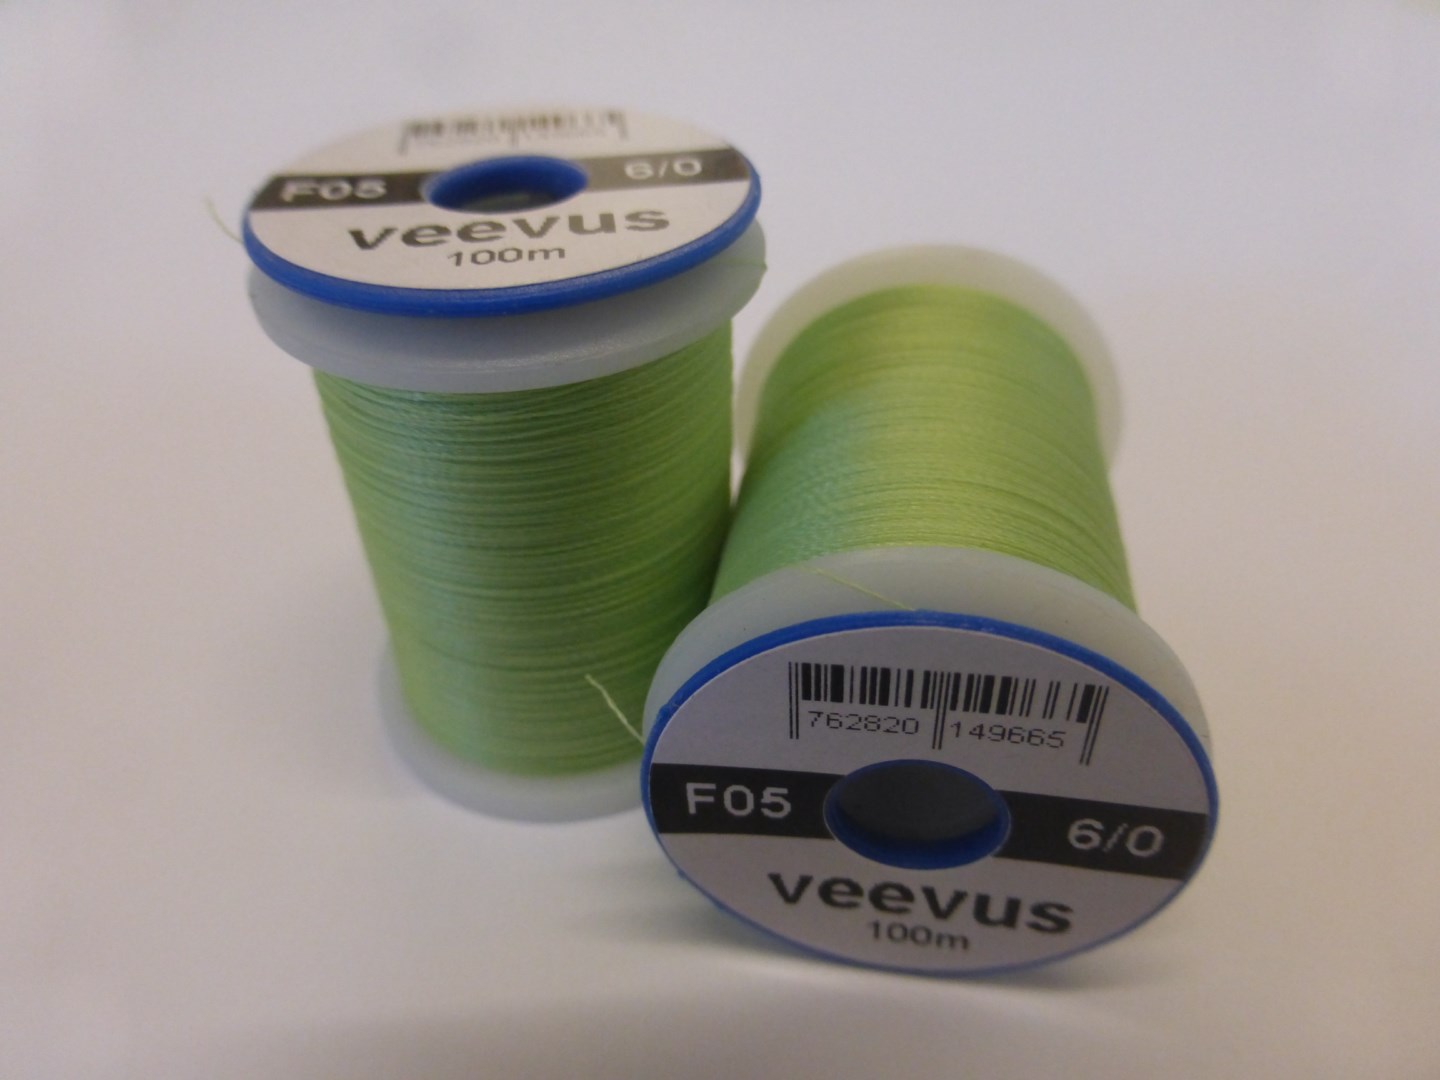 Veevus 6/0 Pale Green F05